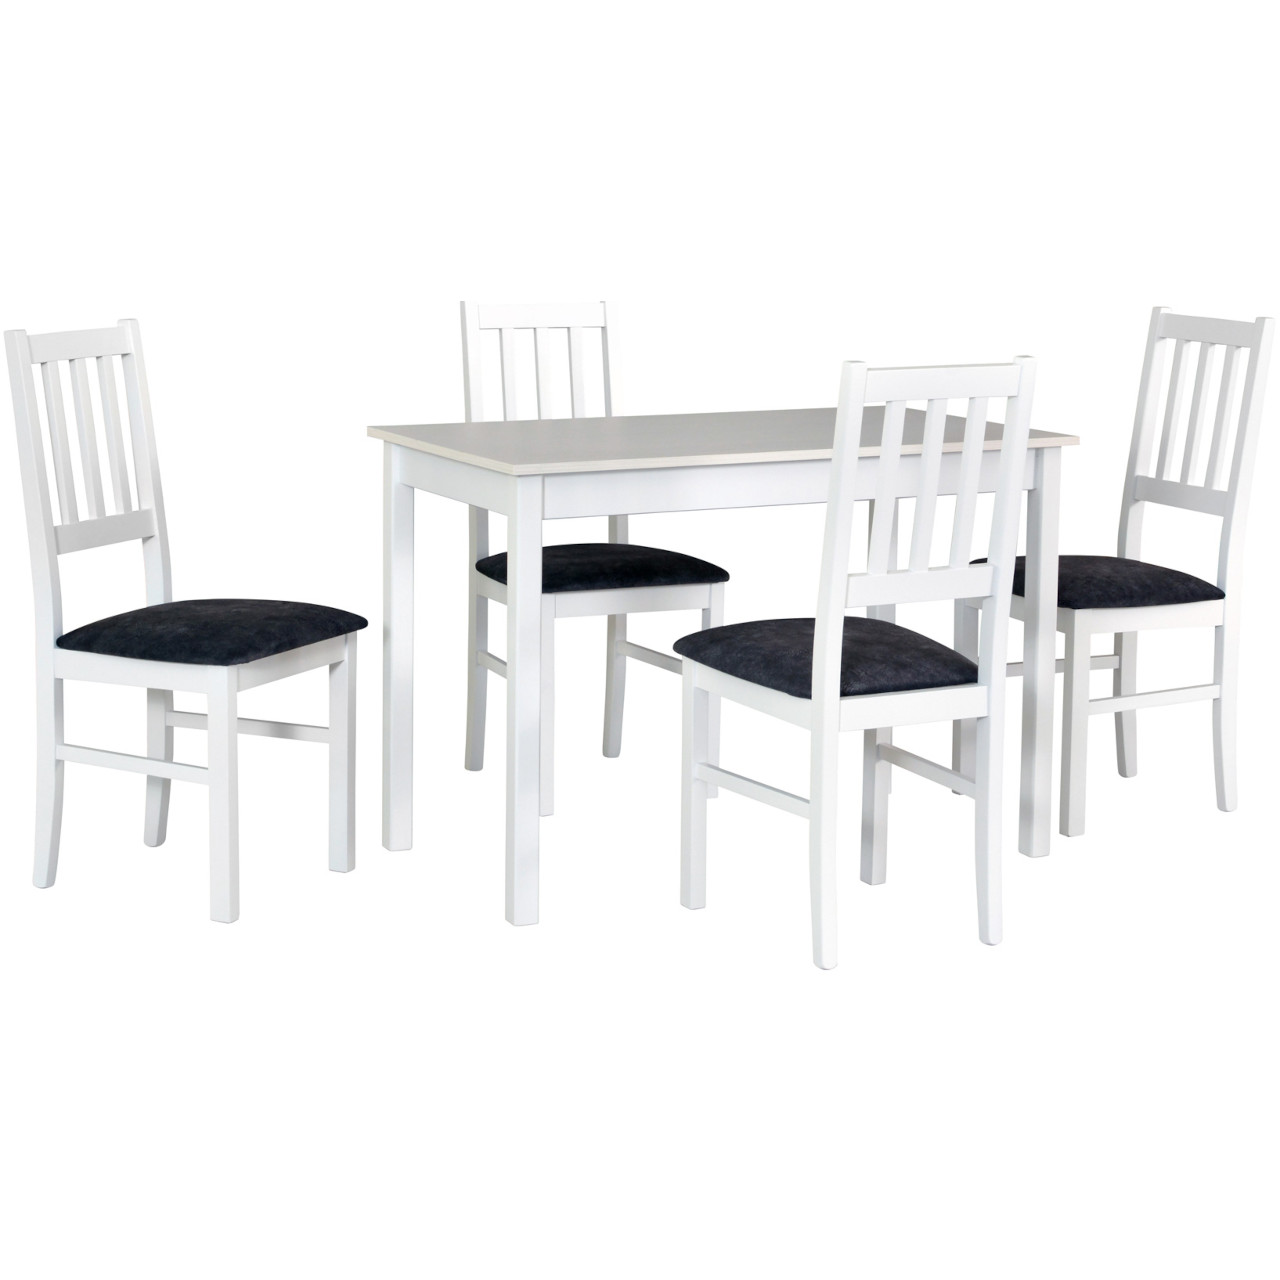 Stôl MAX 2 biely laminát + stoličky BOS 4 (4 ks) biele / 24B